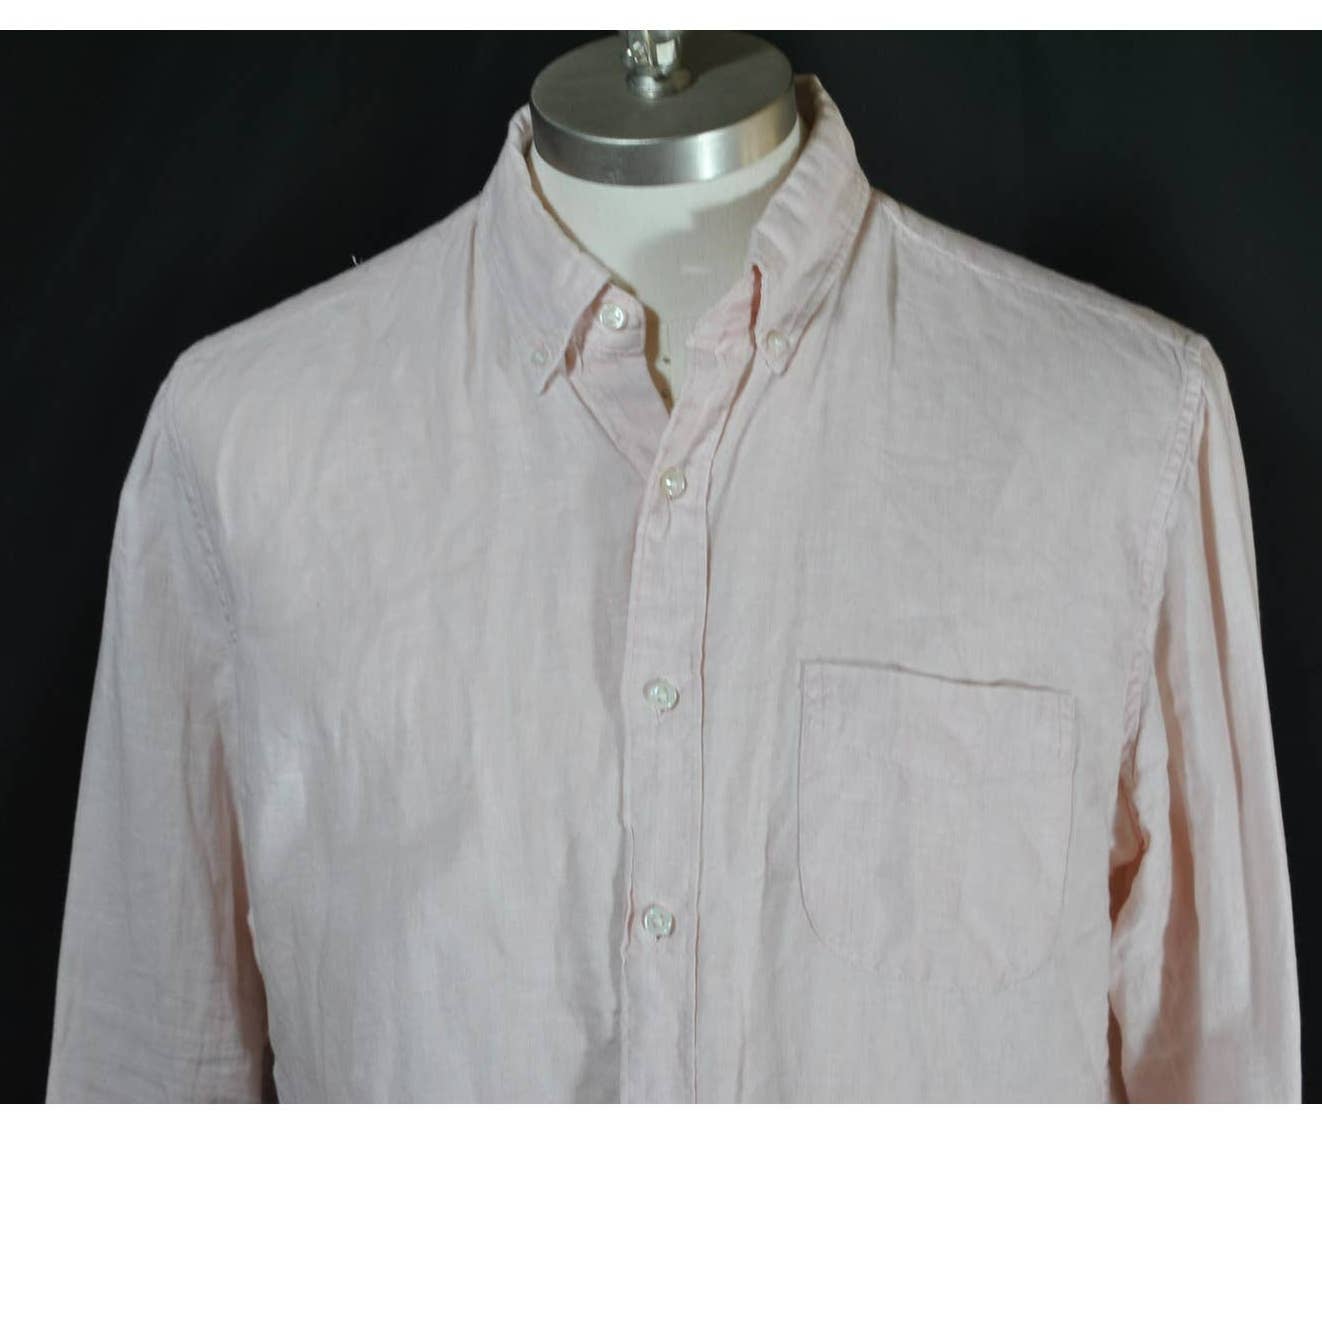 J.Crew Pink Irish Linen Slim Untucked Button Up Shirt - L